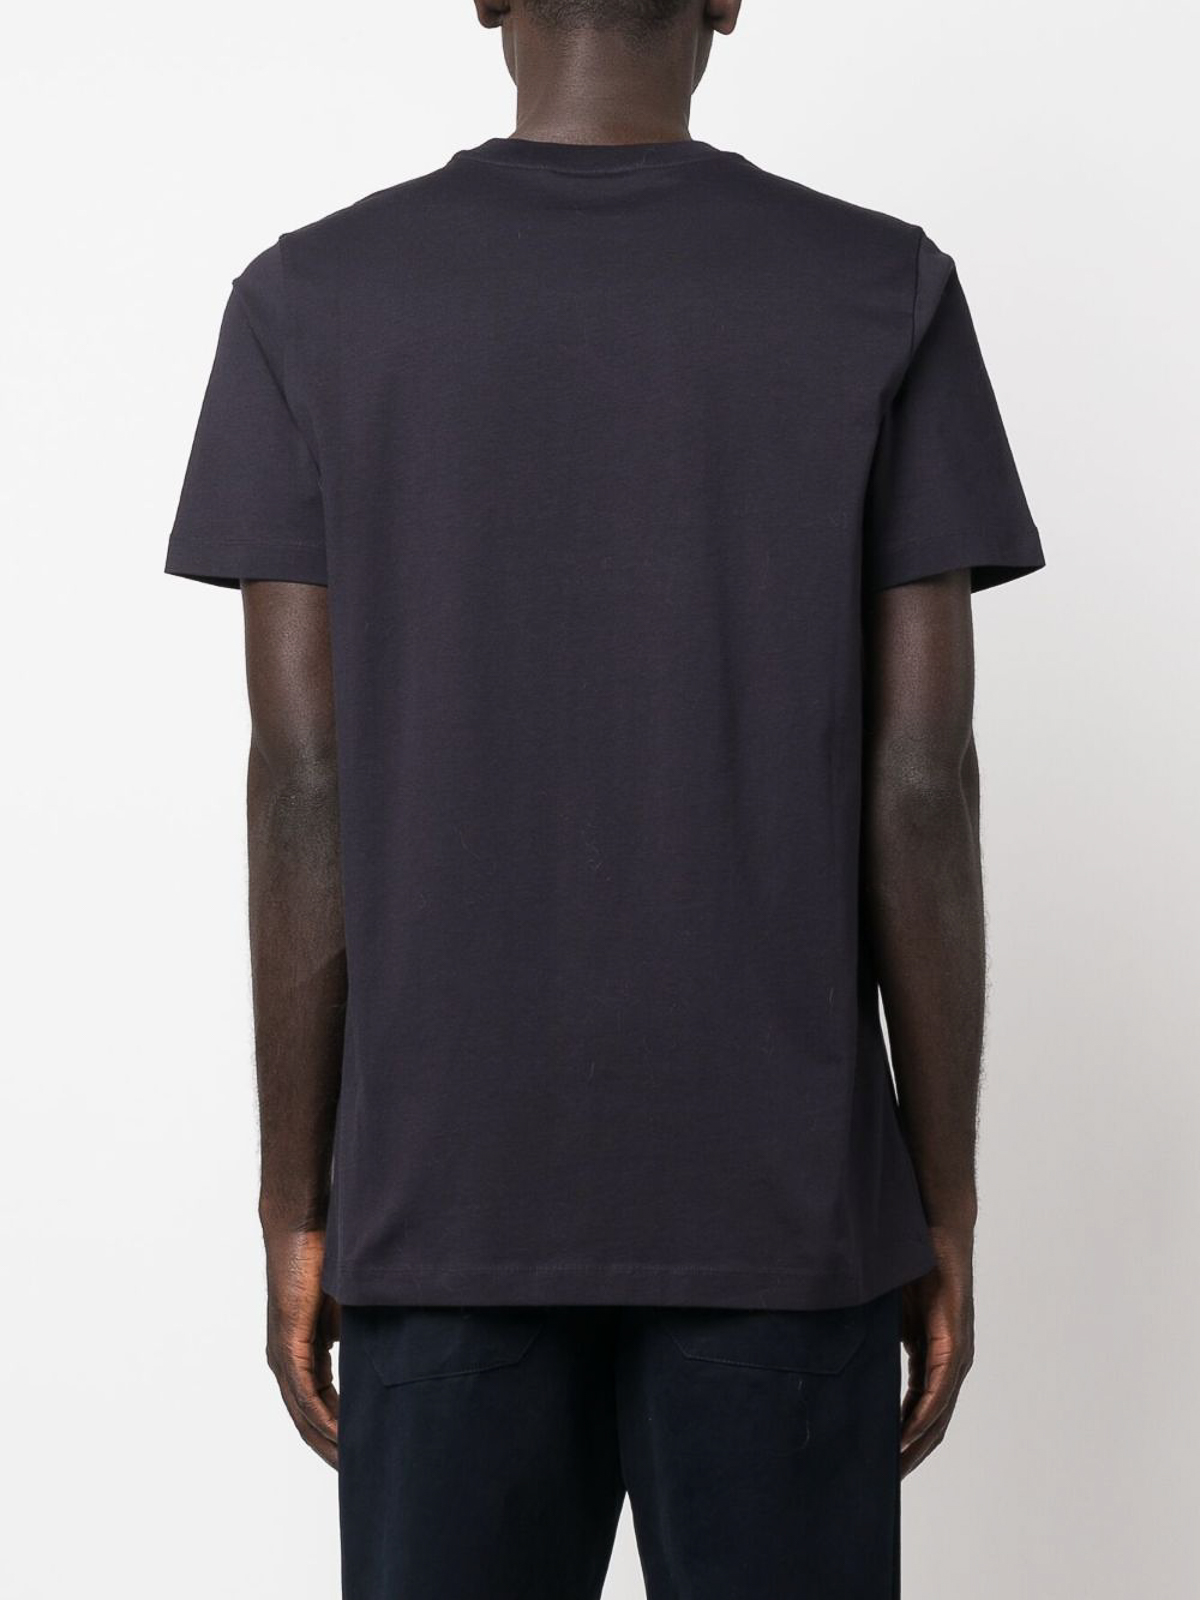 Shop Marni Camiseta - Negro